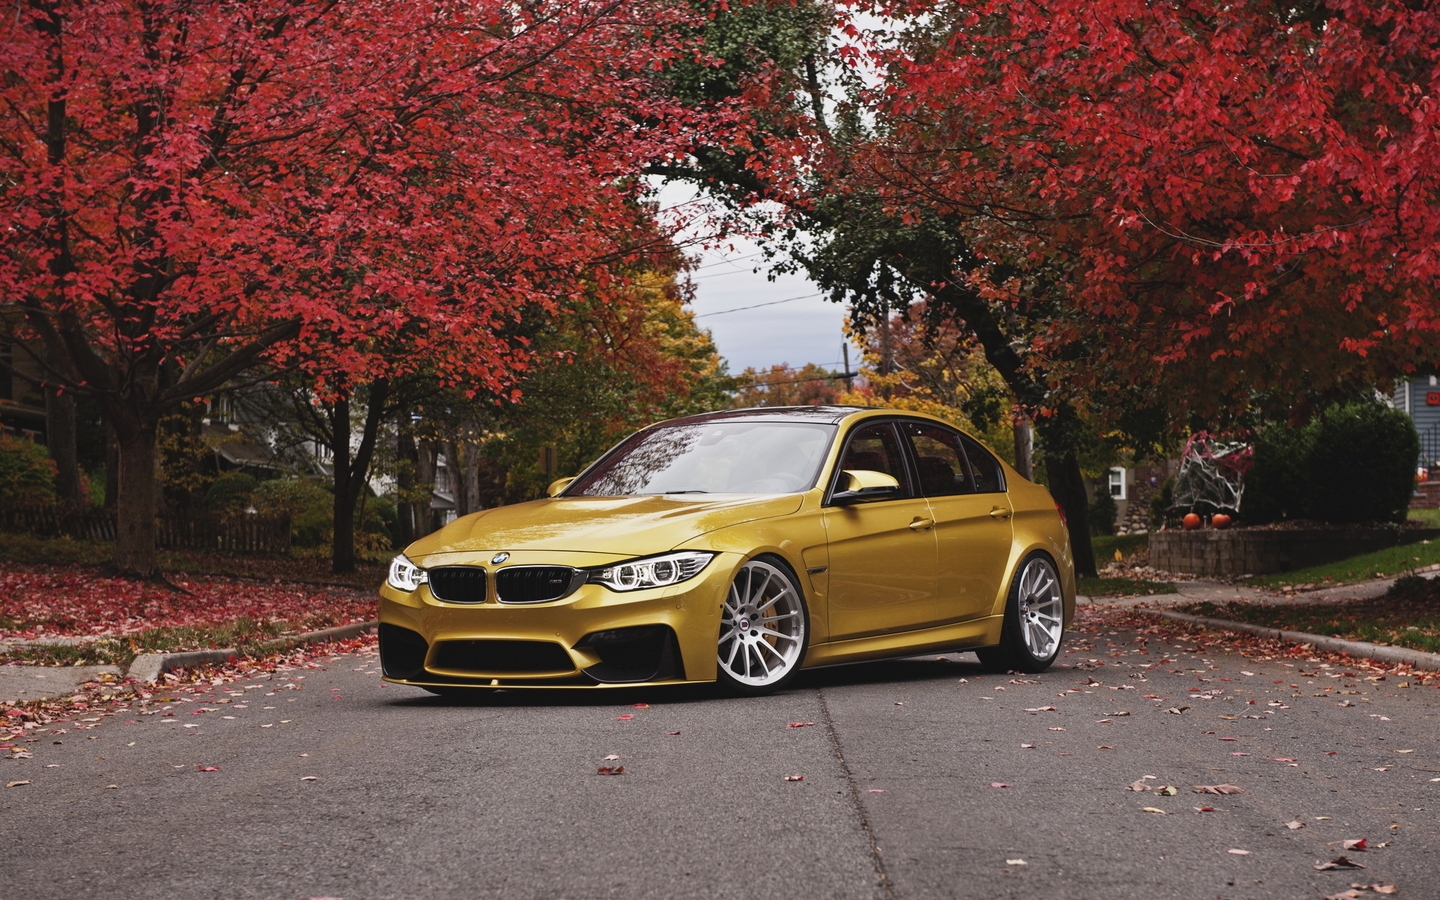 Картинка: BMW, золотистый, M3, F80, Gold, дорога, деревья, осень